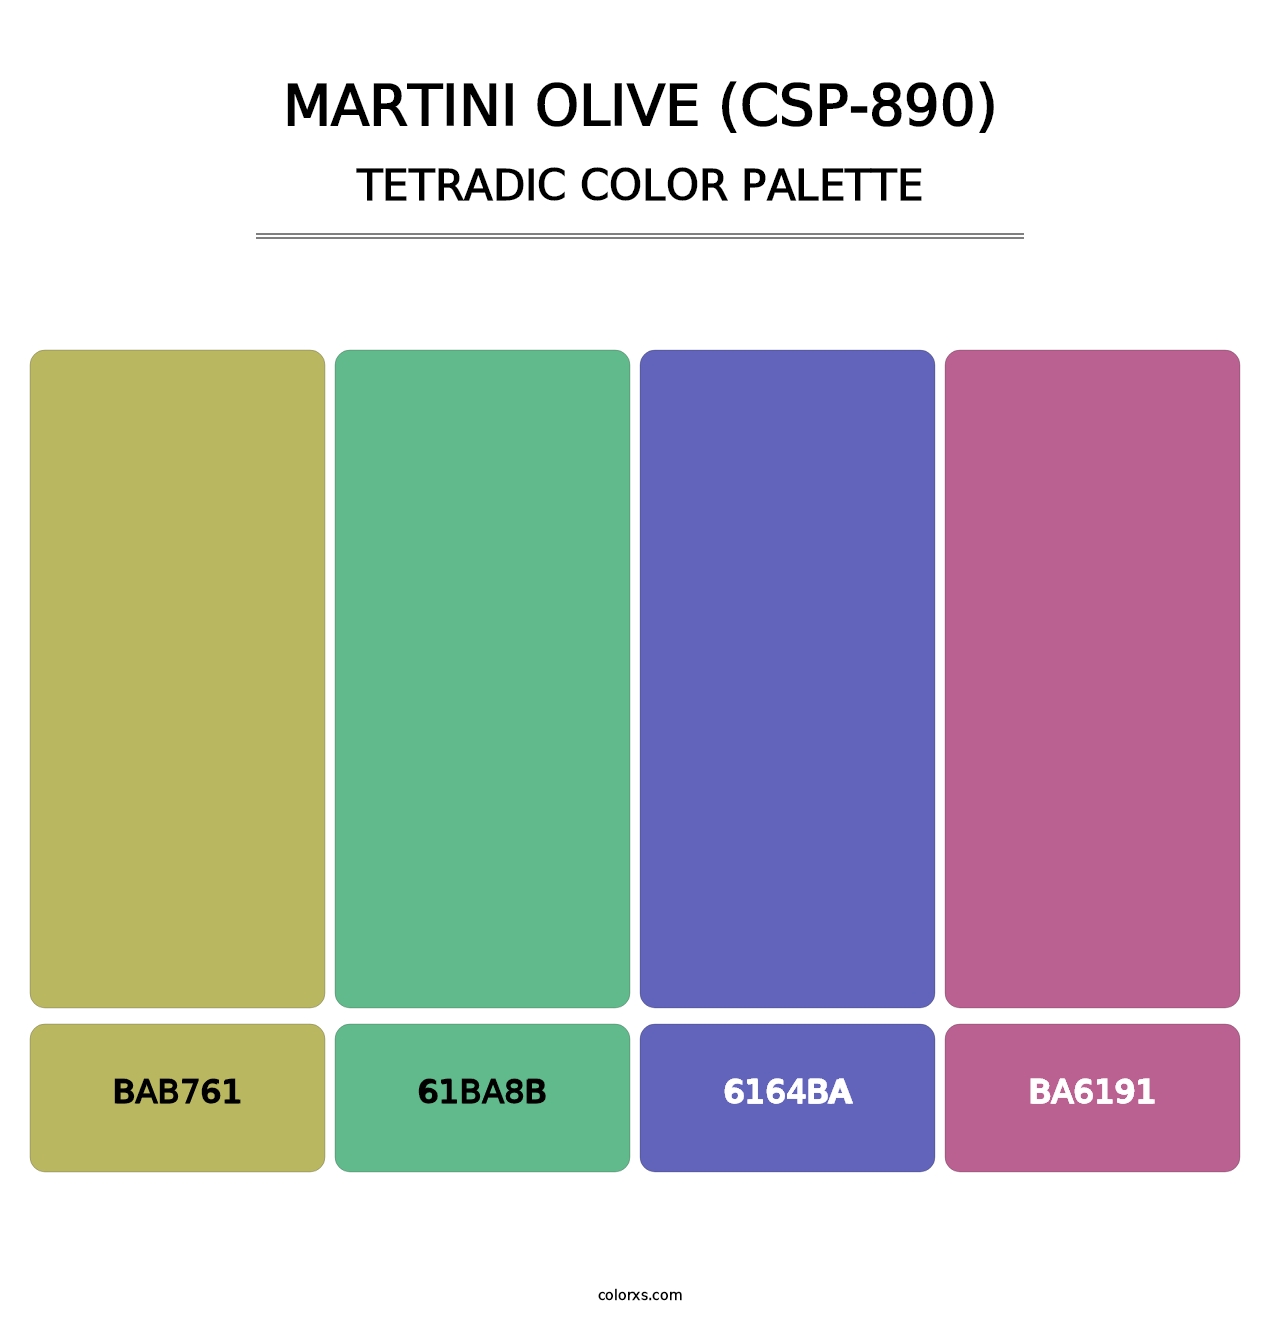 Martini Olive (CSP-890) - Tetradic Color Palette